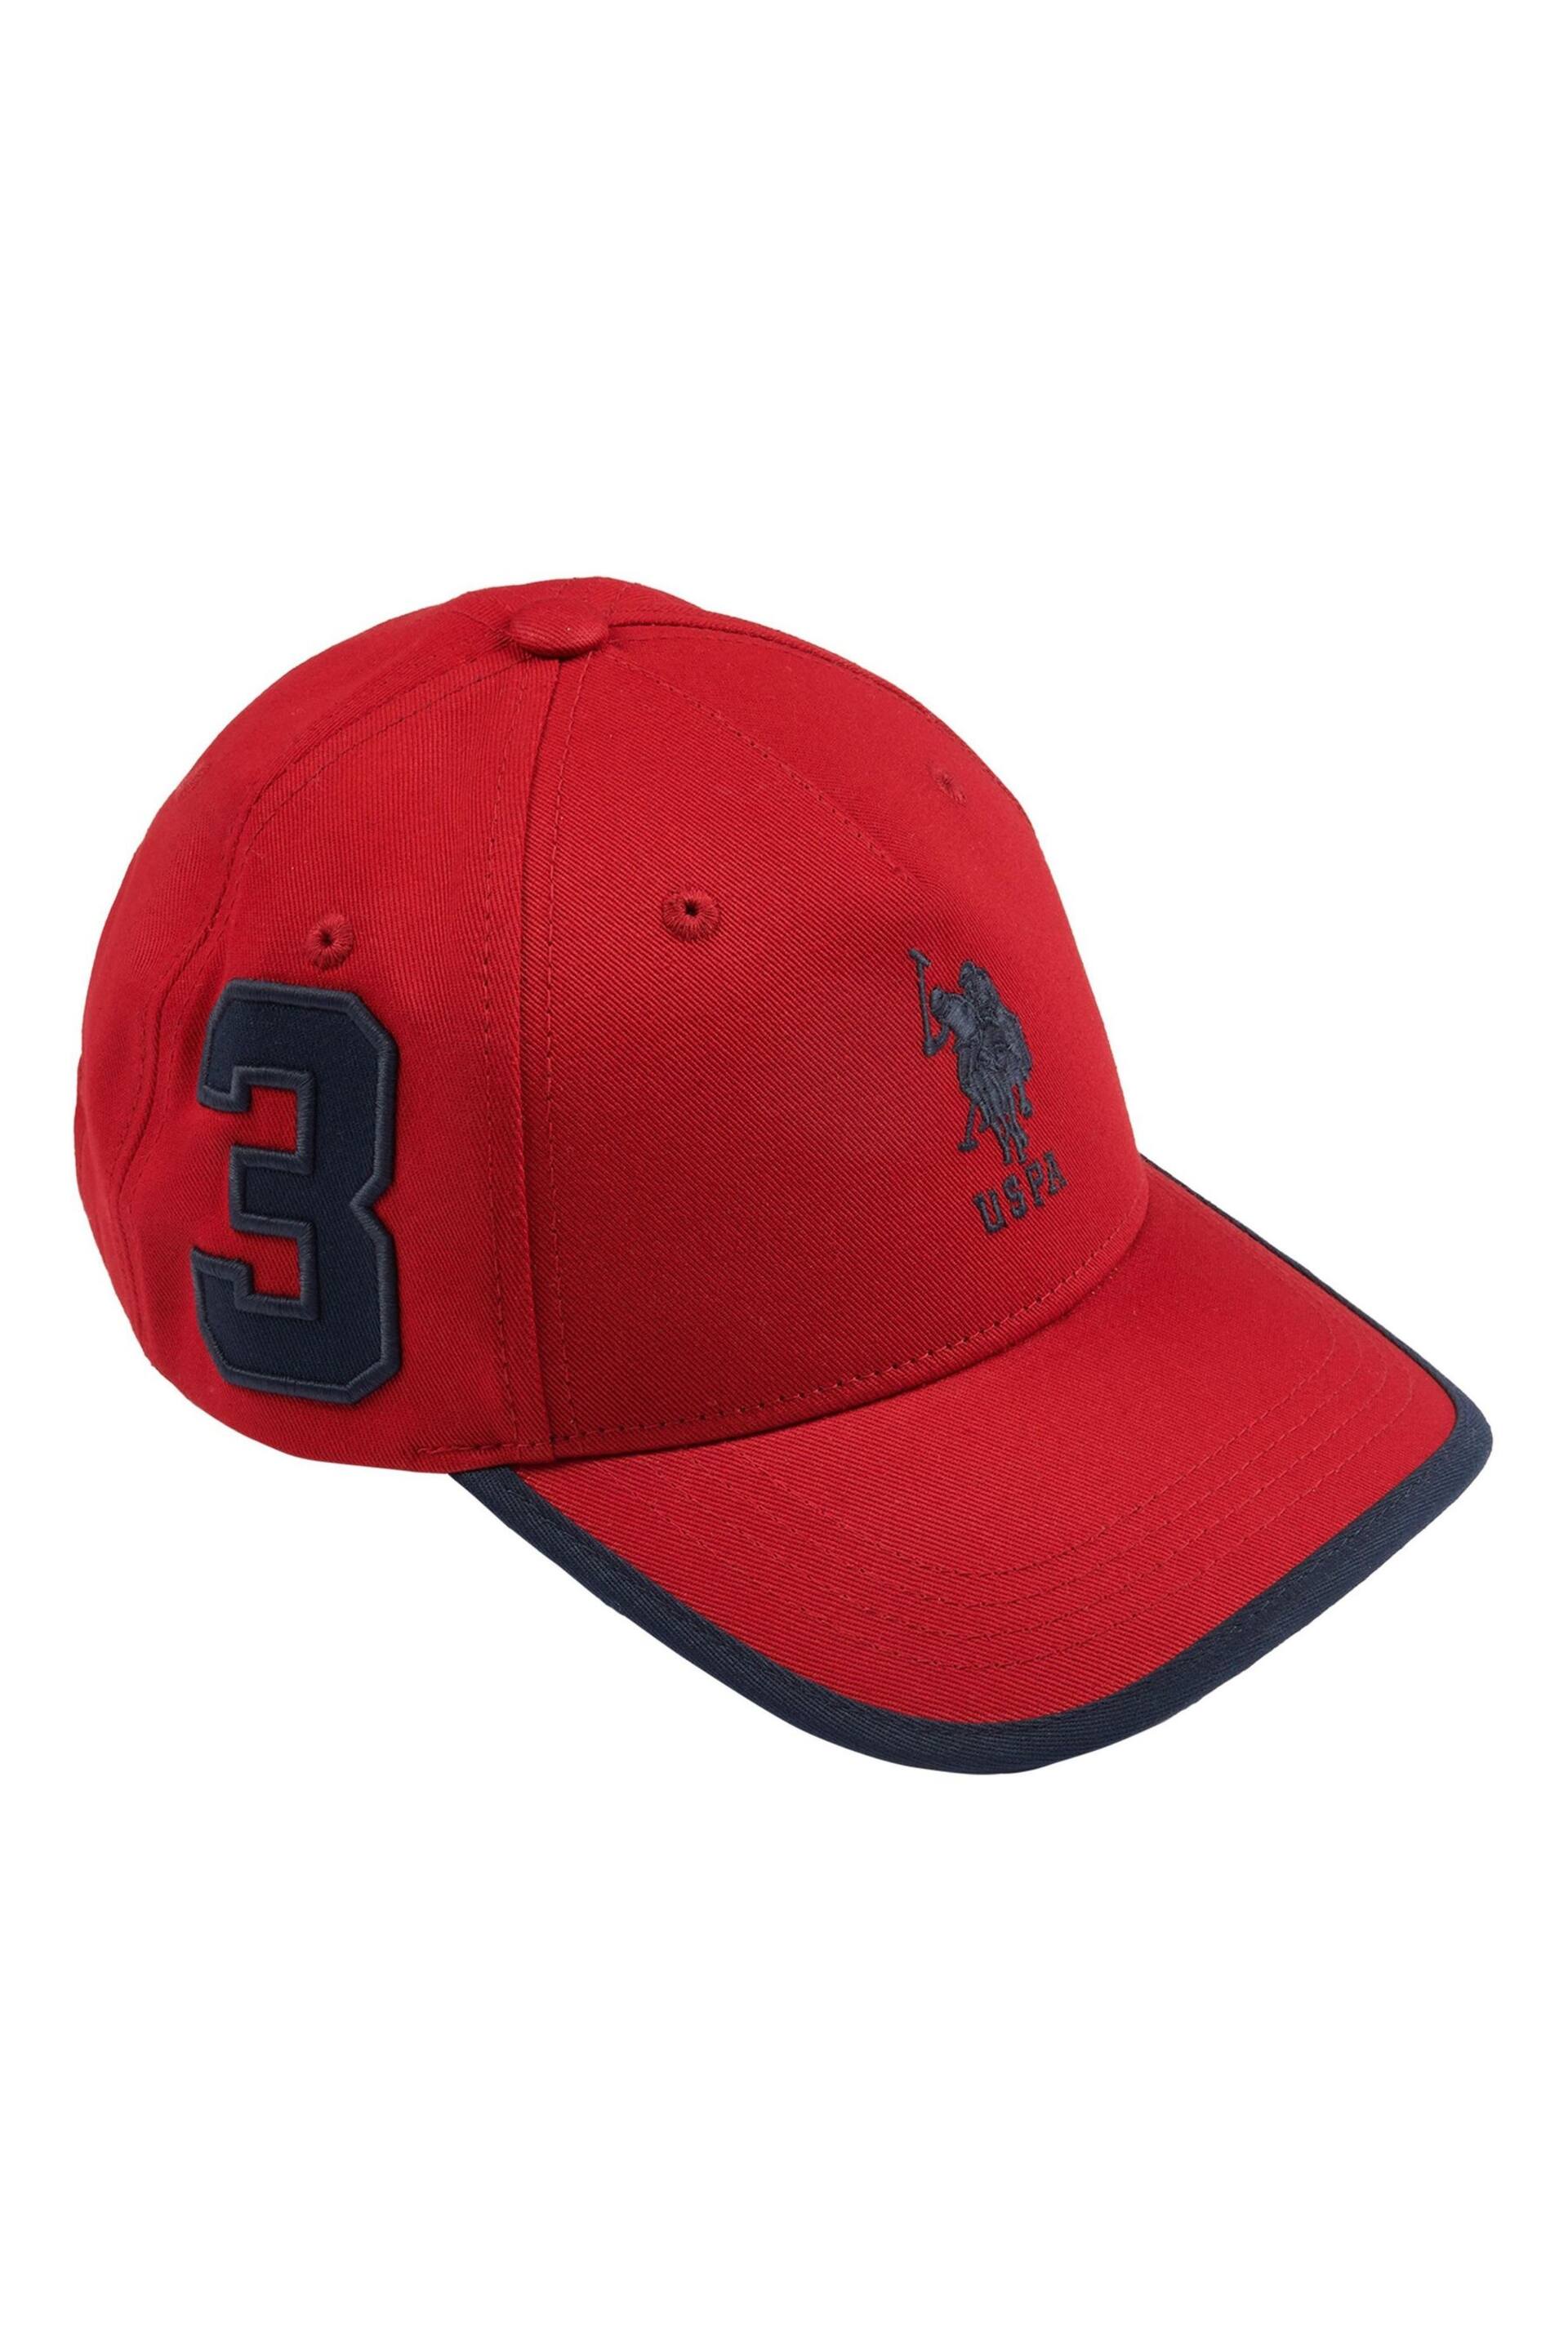 U.S. Polo Assn. Boys Red Player 3 Baseball Cap - Image 1 of 2